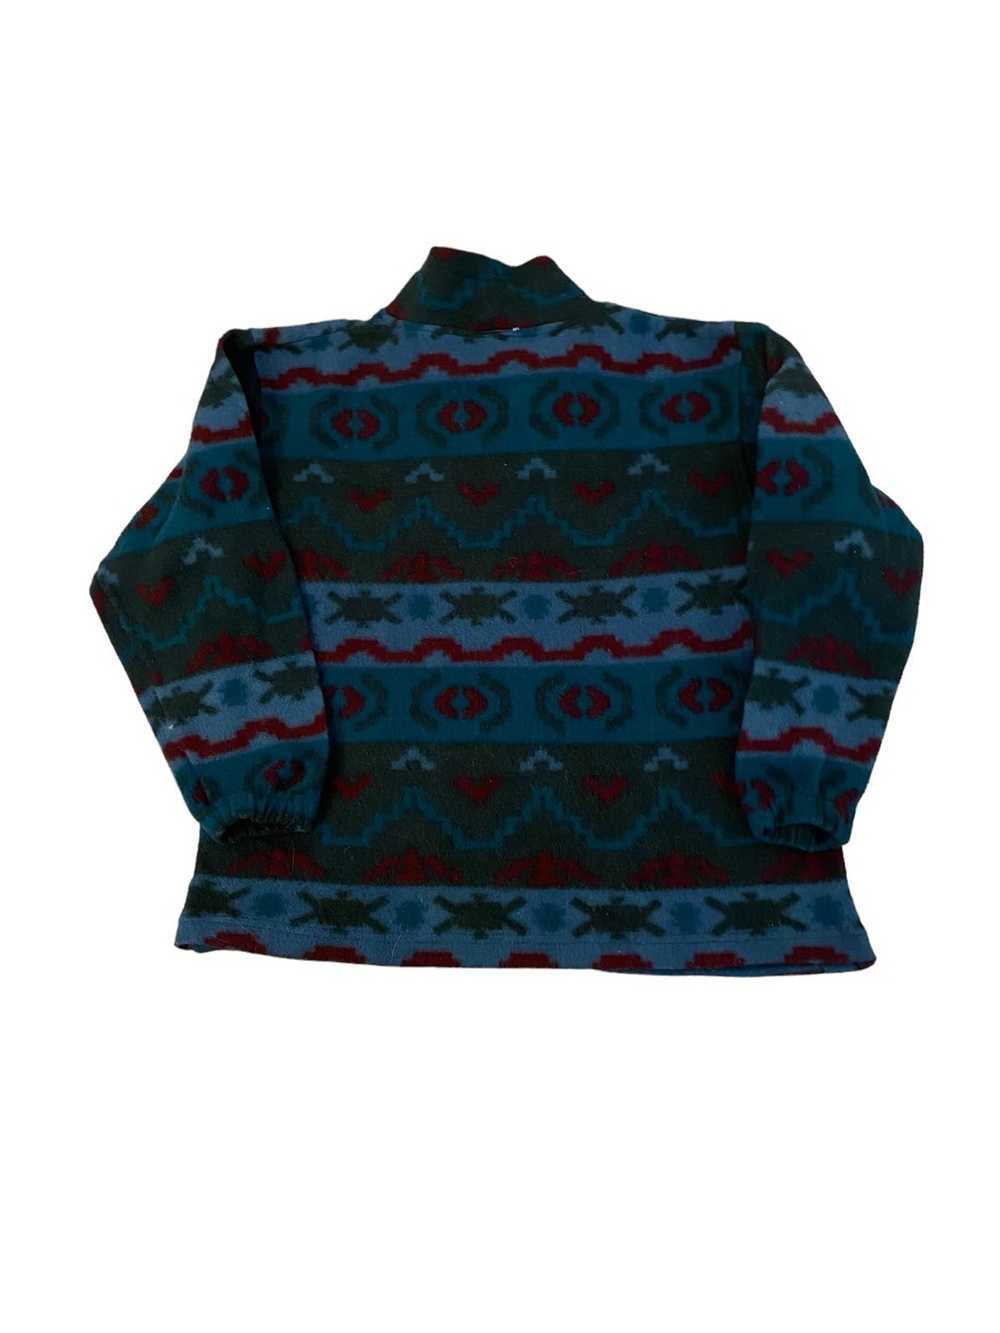 Vintage Vintage Tribal Fleece Sweatshirt - image 2